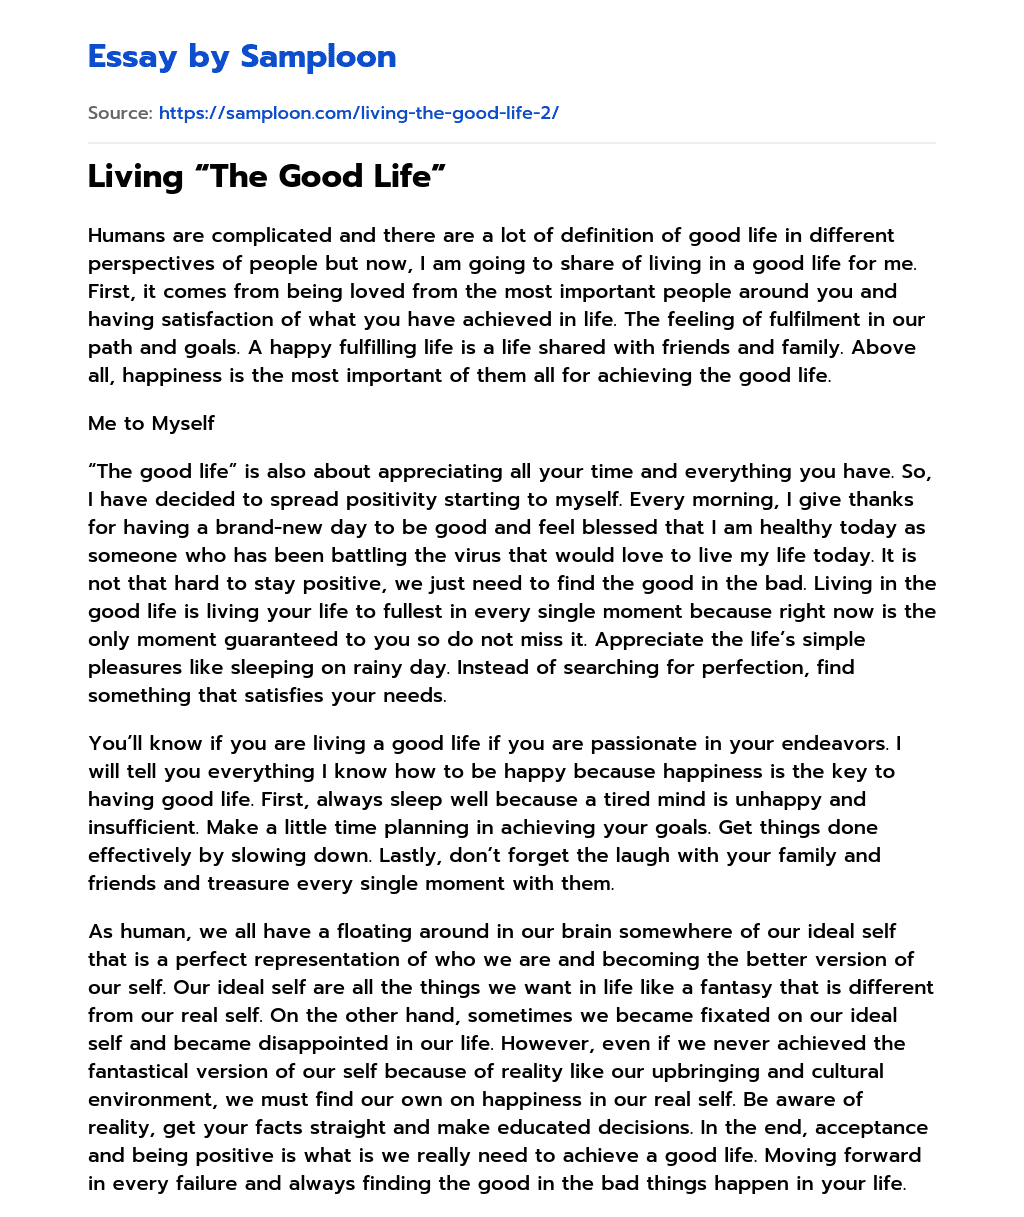 Living “The Good Life”  essay